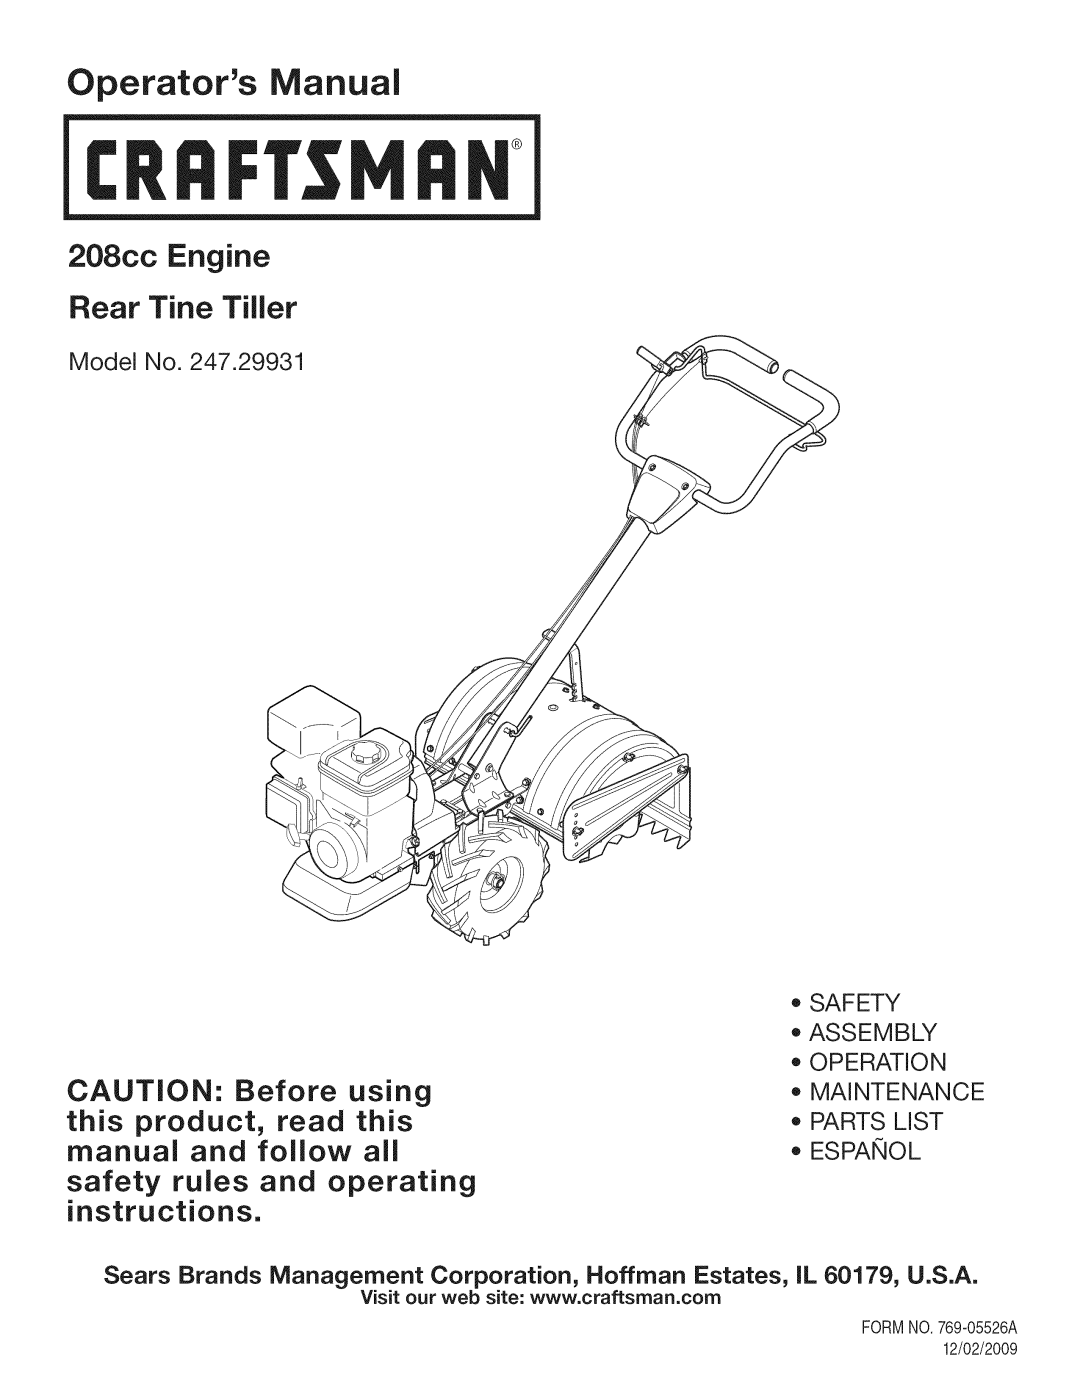 Craftsman 247.29931 manual 208cc Engine Rear Tine Tiller, Model No, Safety Assembly Operation Maintenance Parts List 